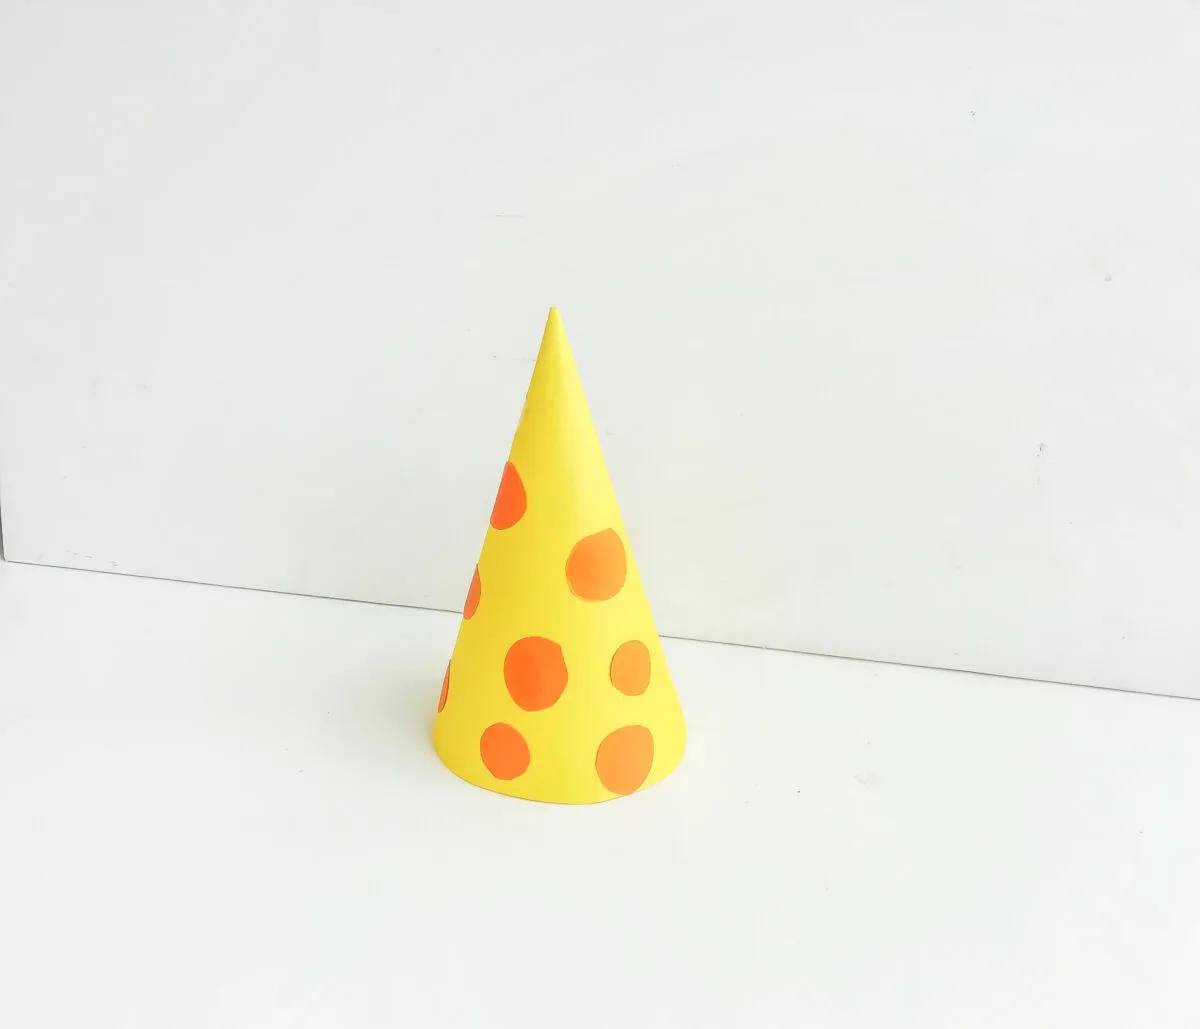 Orange spots on the yellow cone.